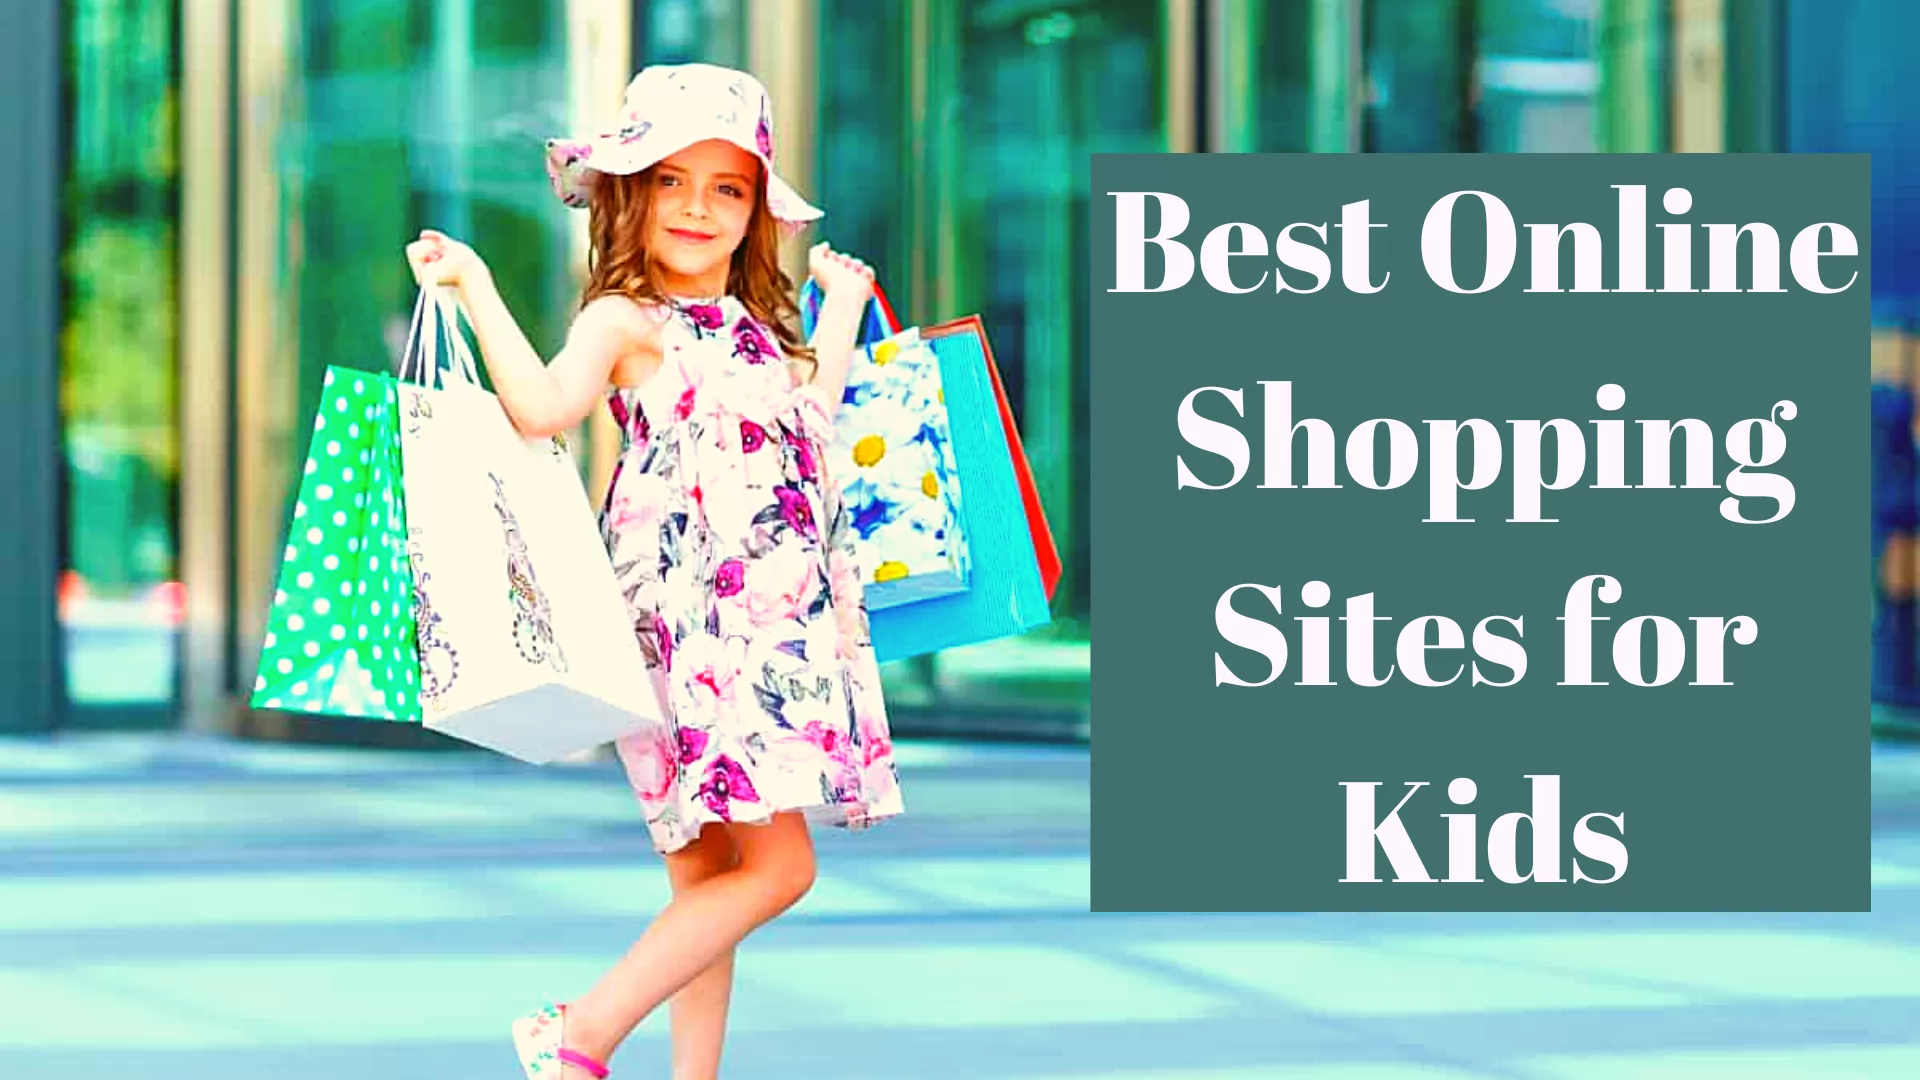 Best Online Shopping Sites for Kids